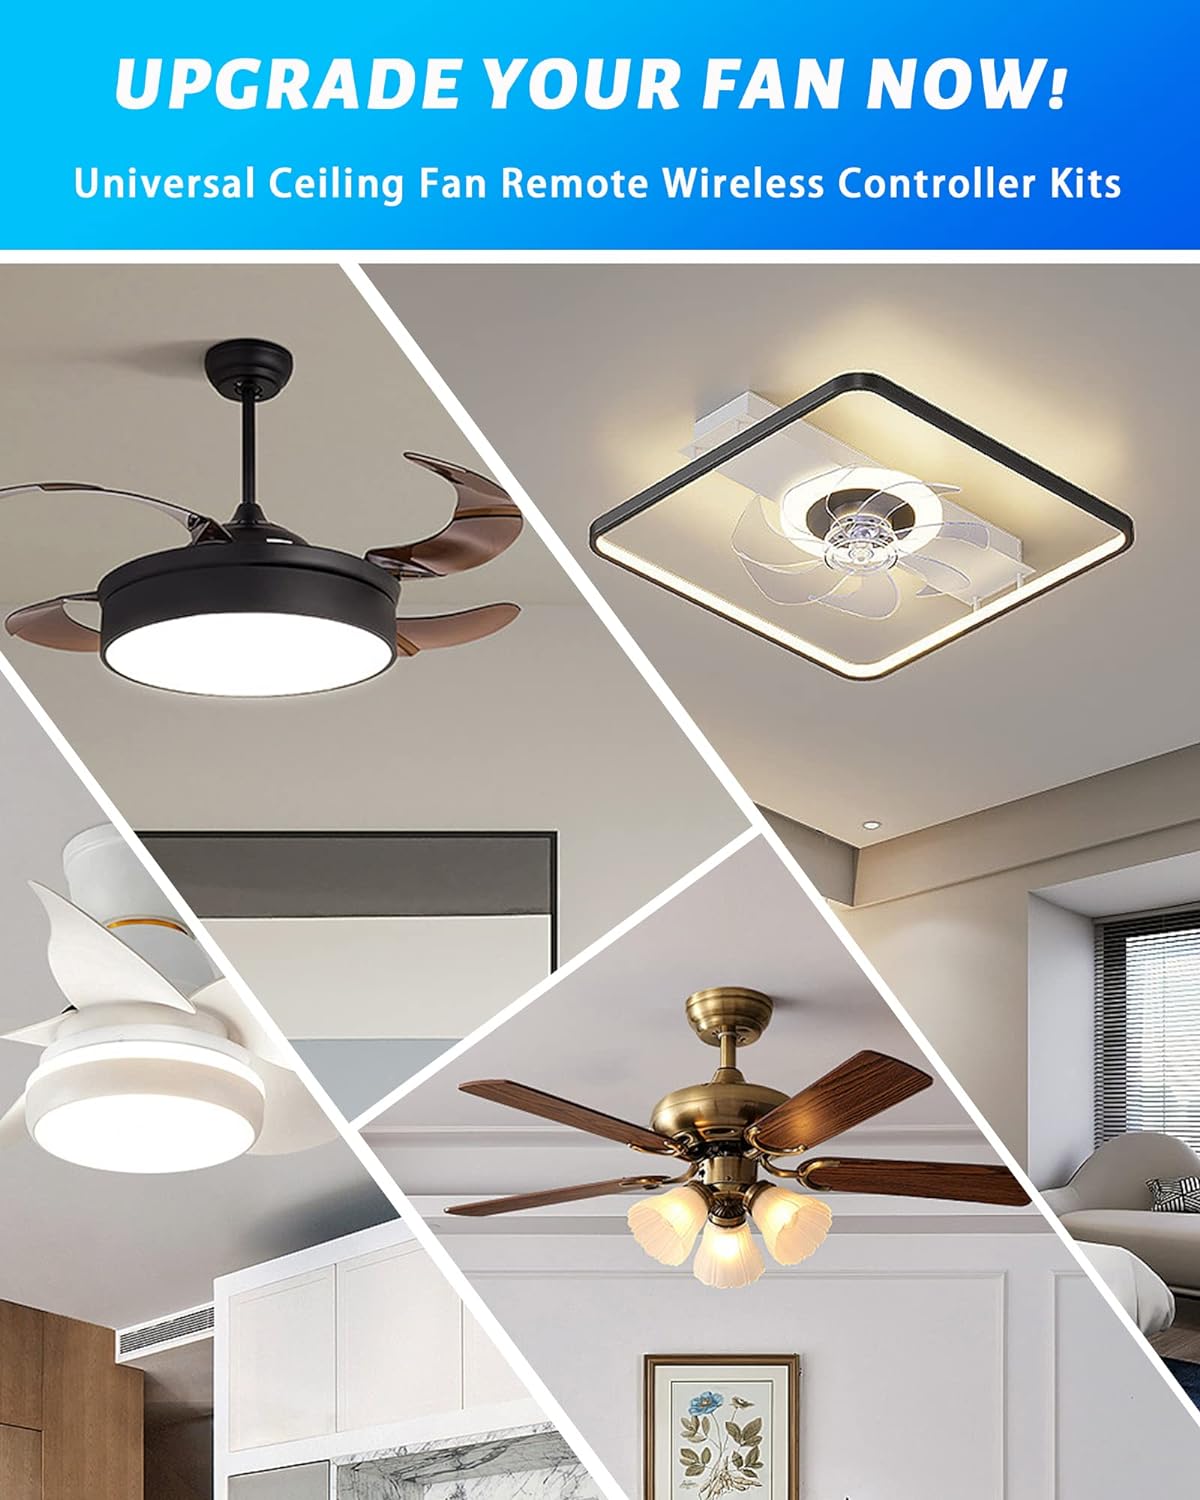 Generic Universal Ceiling Fan Wall Remote Control with Adjustable 3 Speed,Light Dimmer, Smekitlly Single Pole Fan Light Switch Combo, N